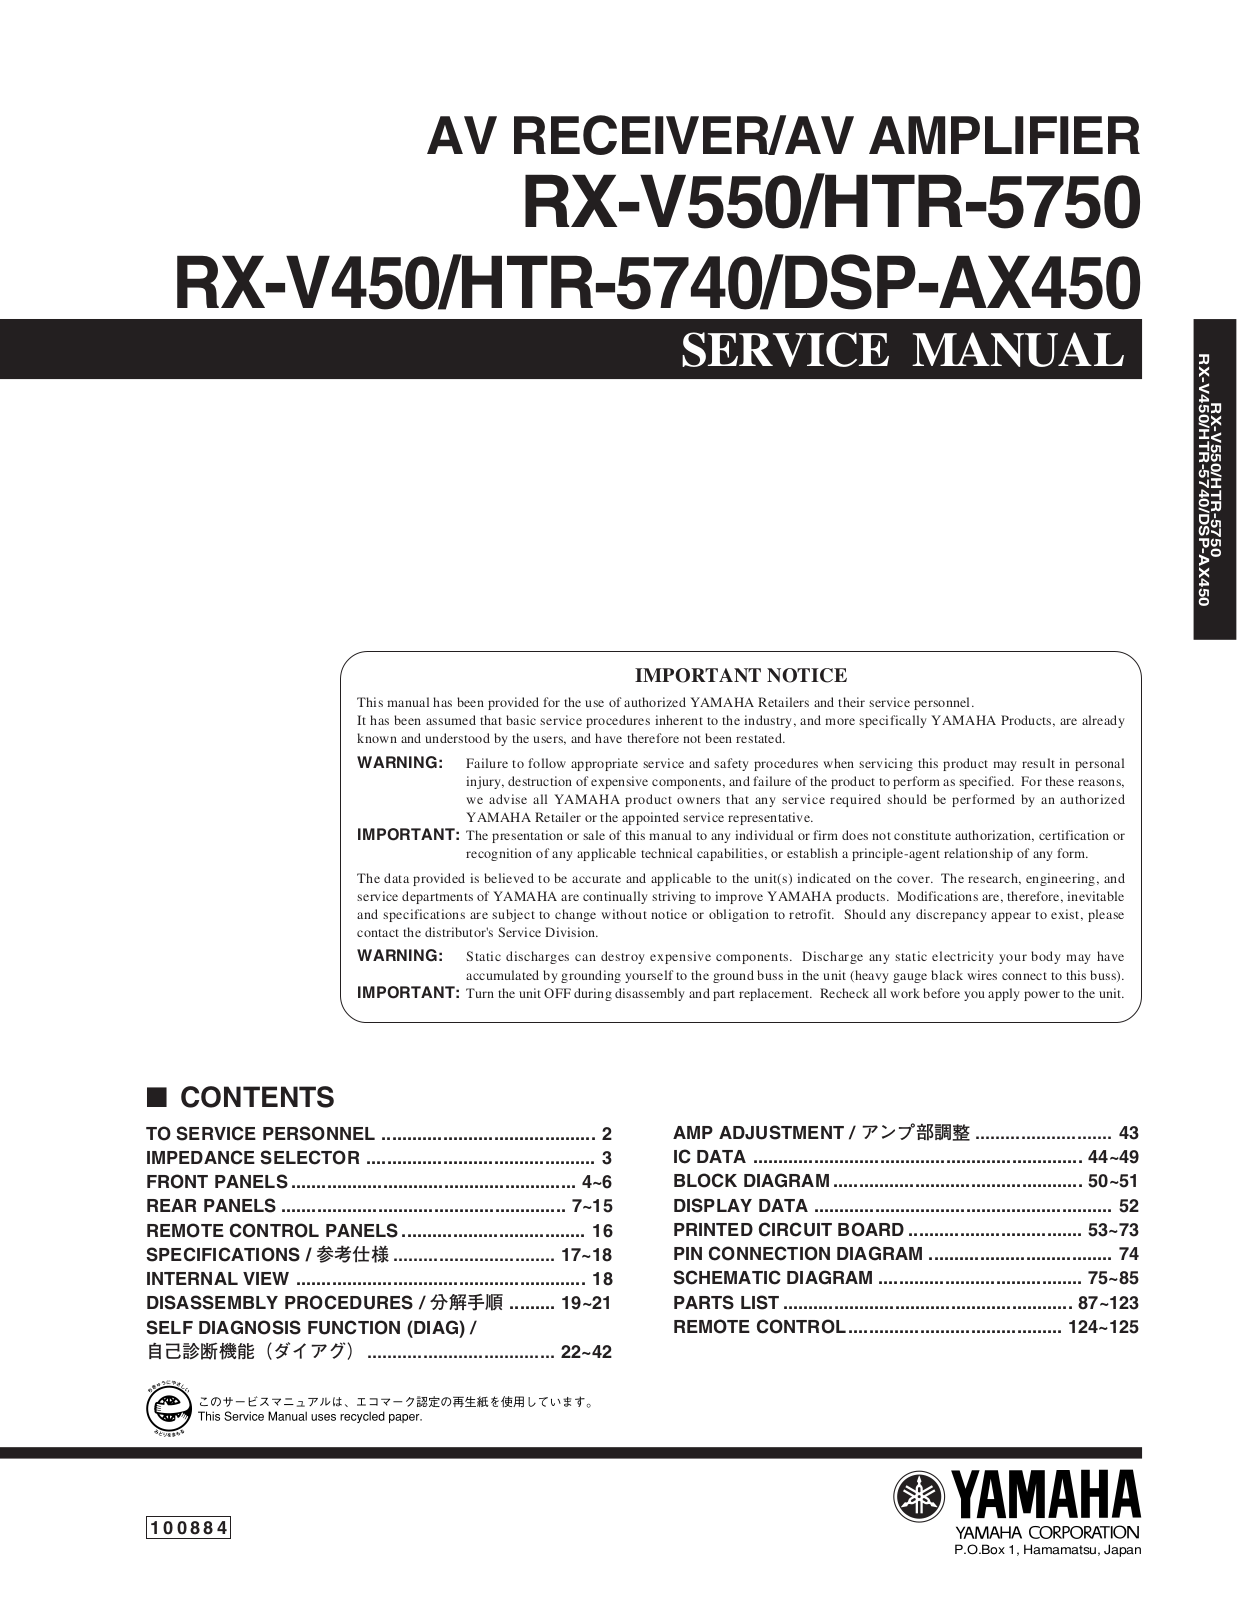 Yamaha HTR-5740 Service manual